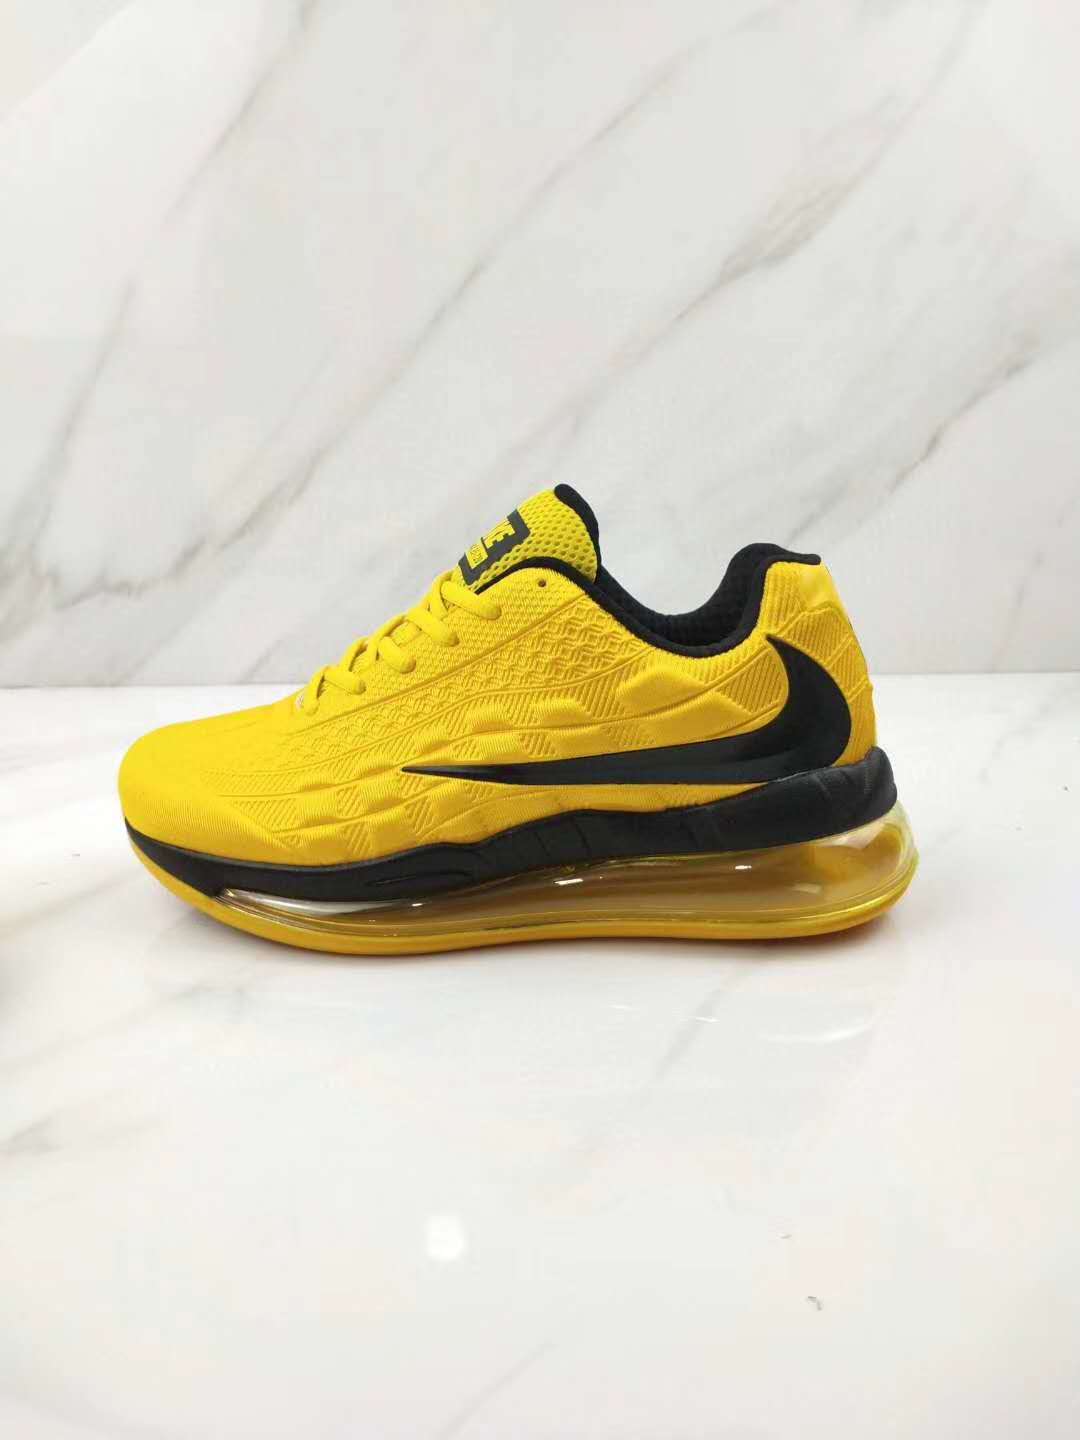 Nike Air Max 95+720 Yellow Black Shoes